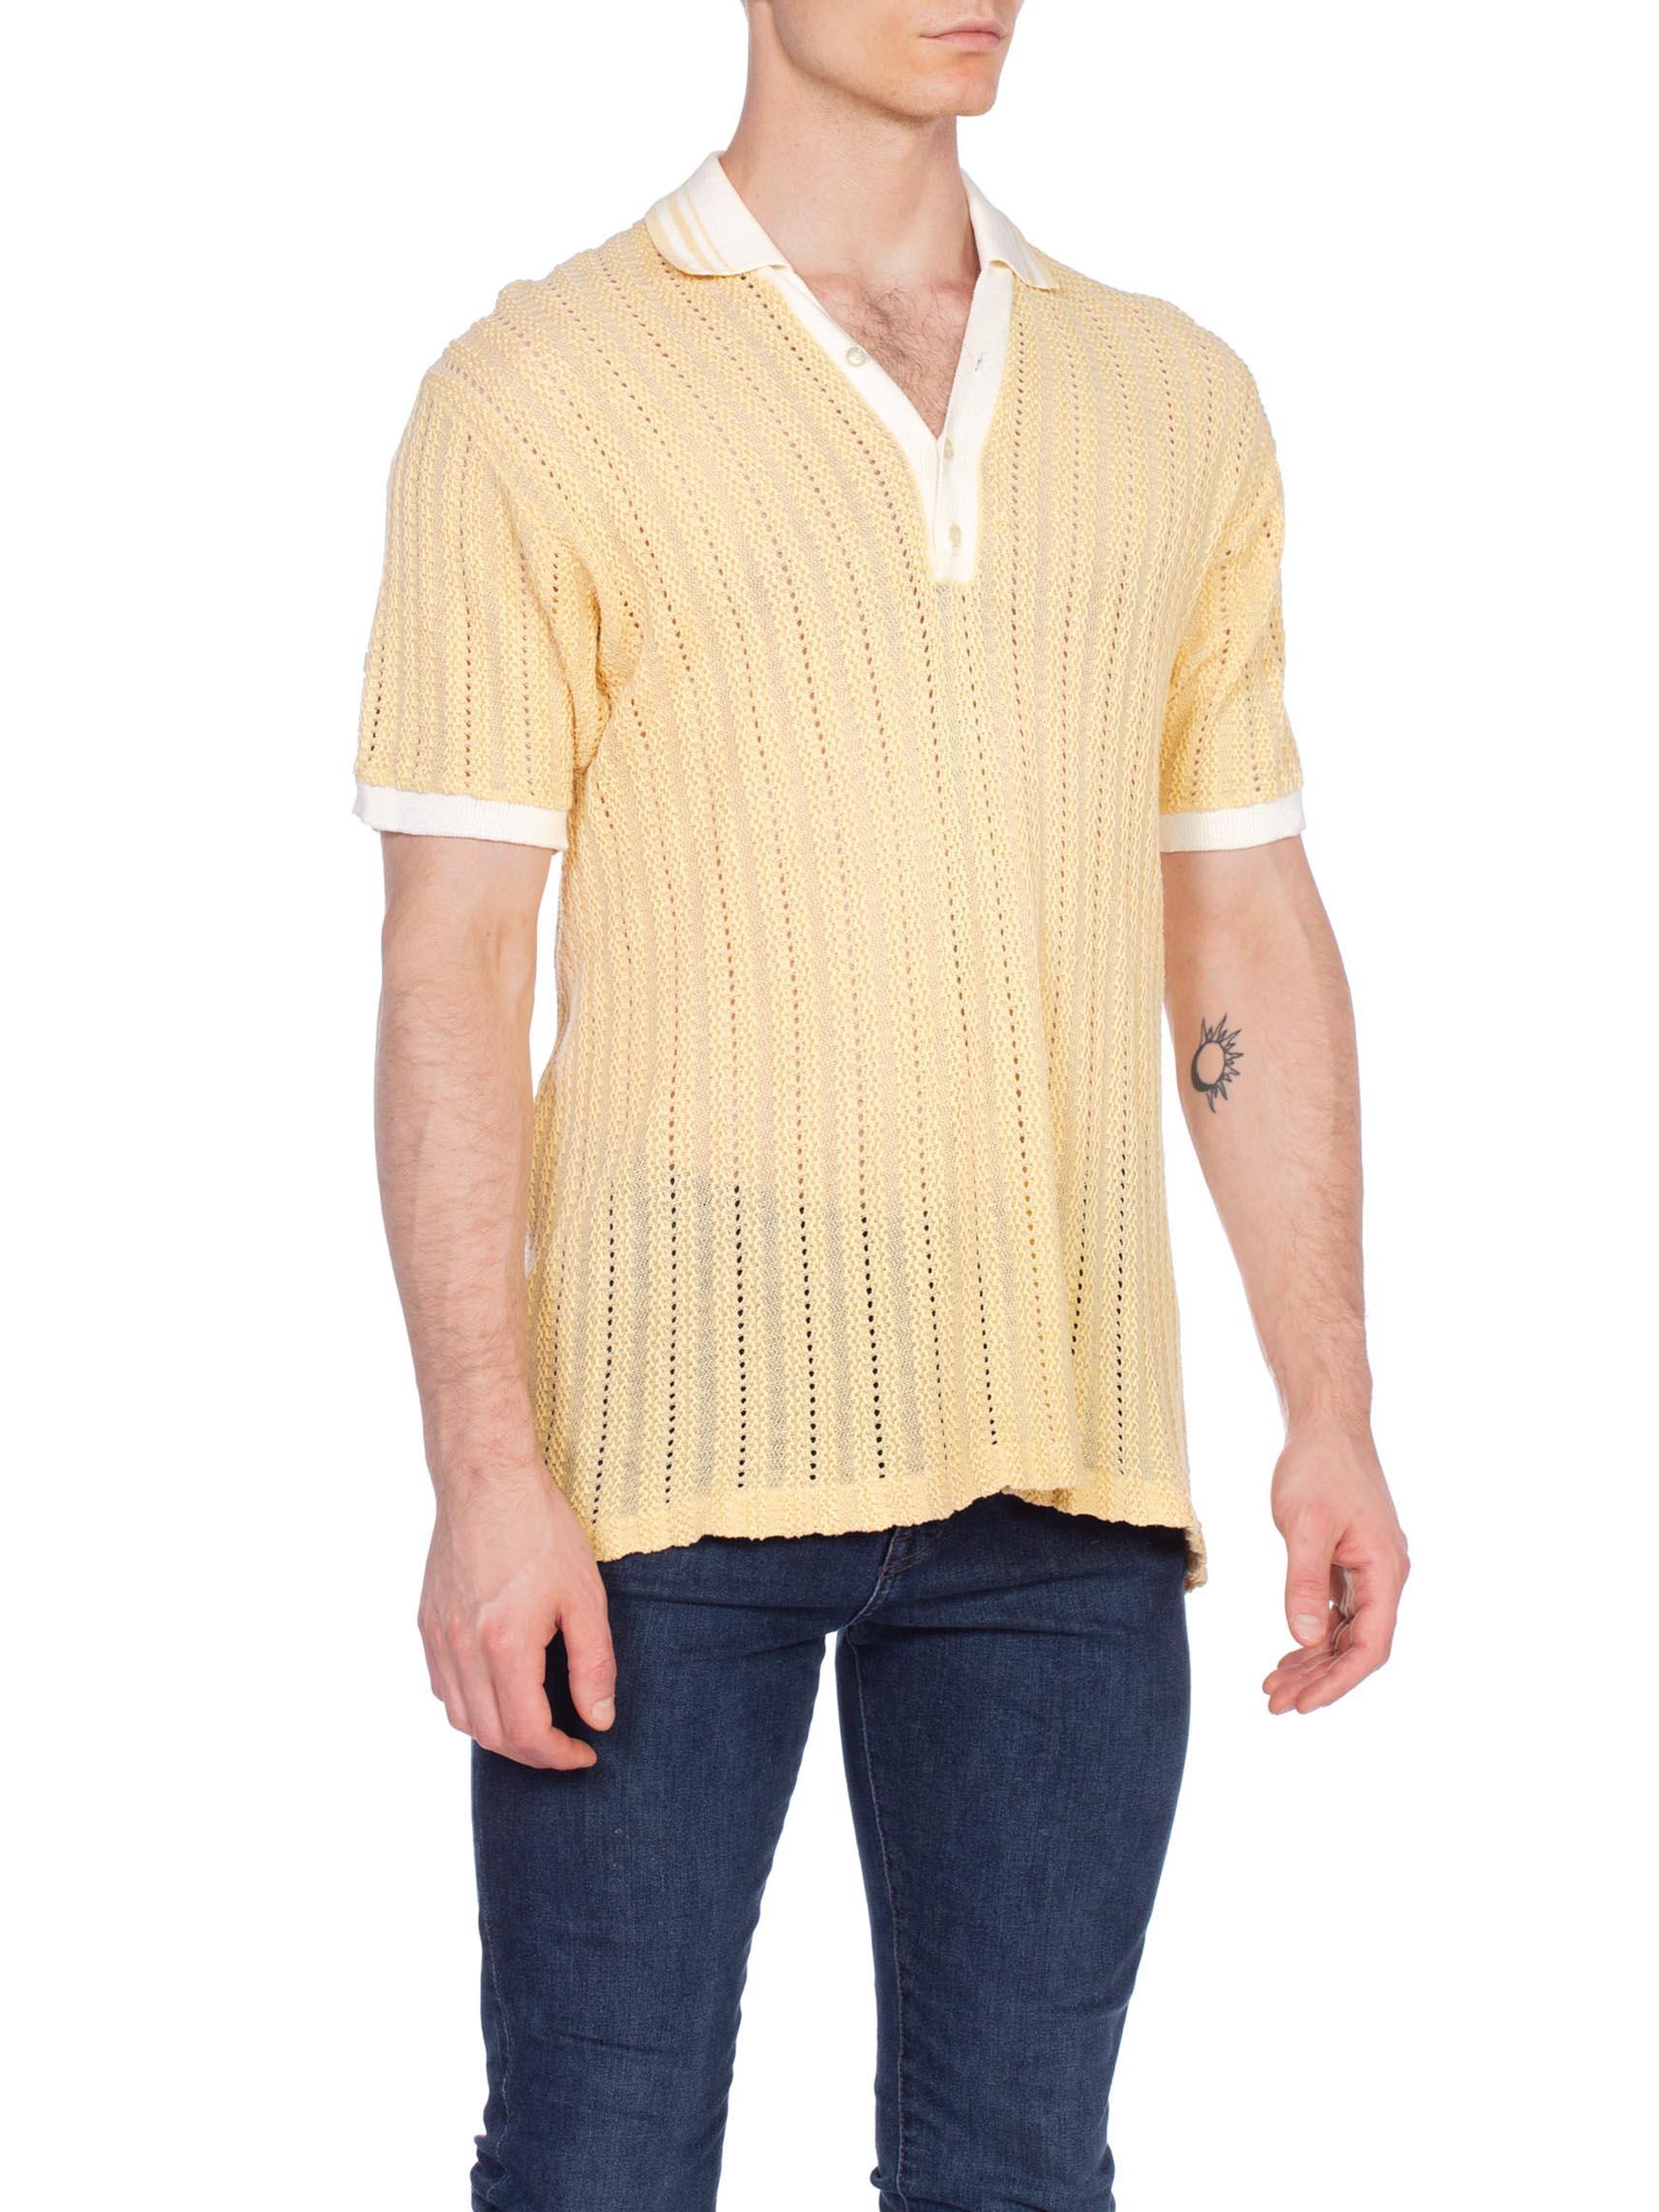 yellow polo shirt for men